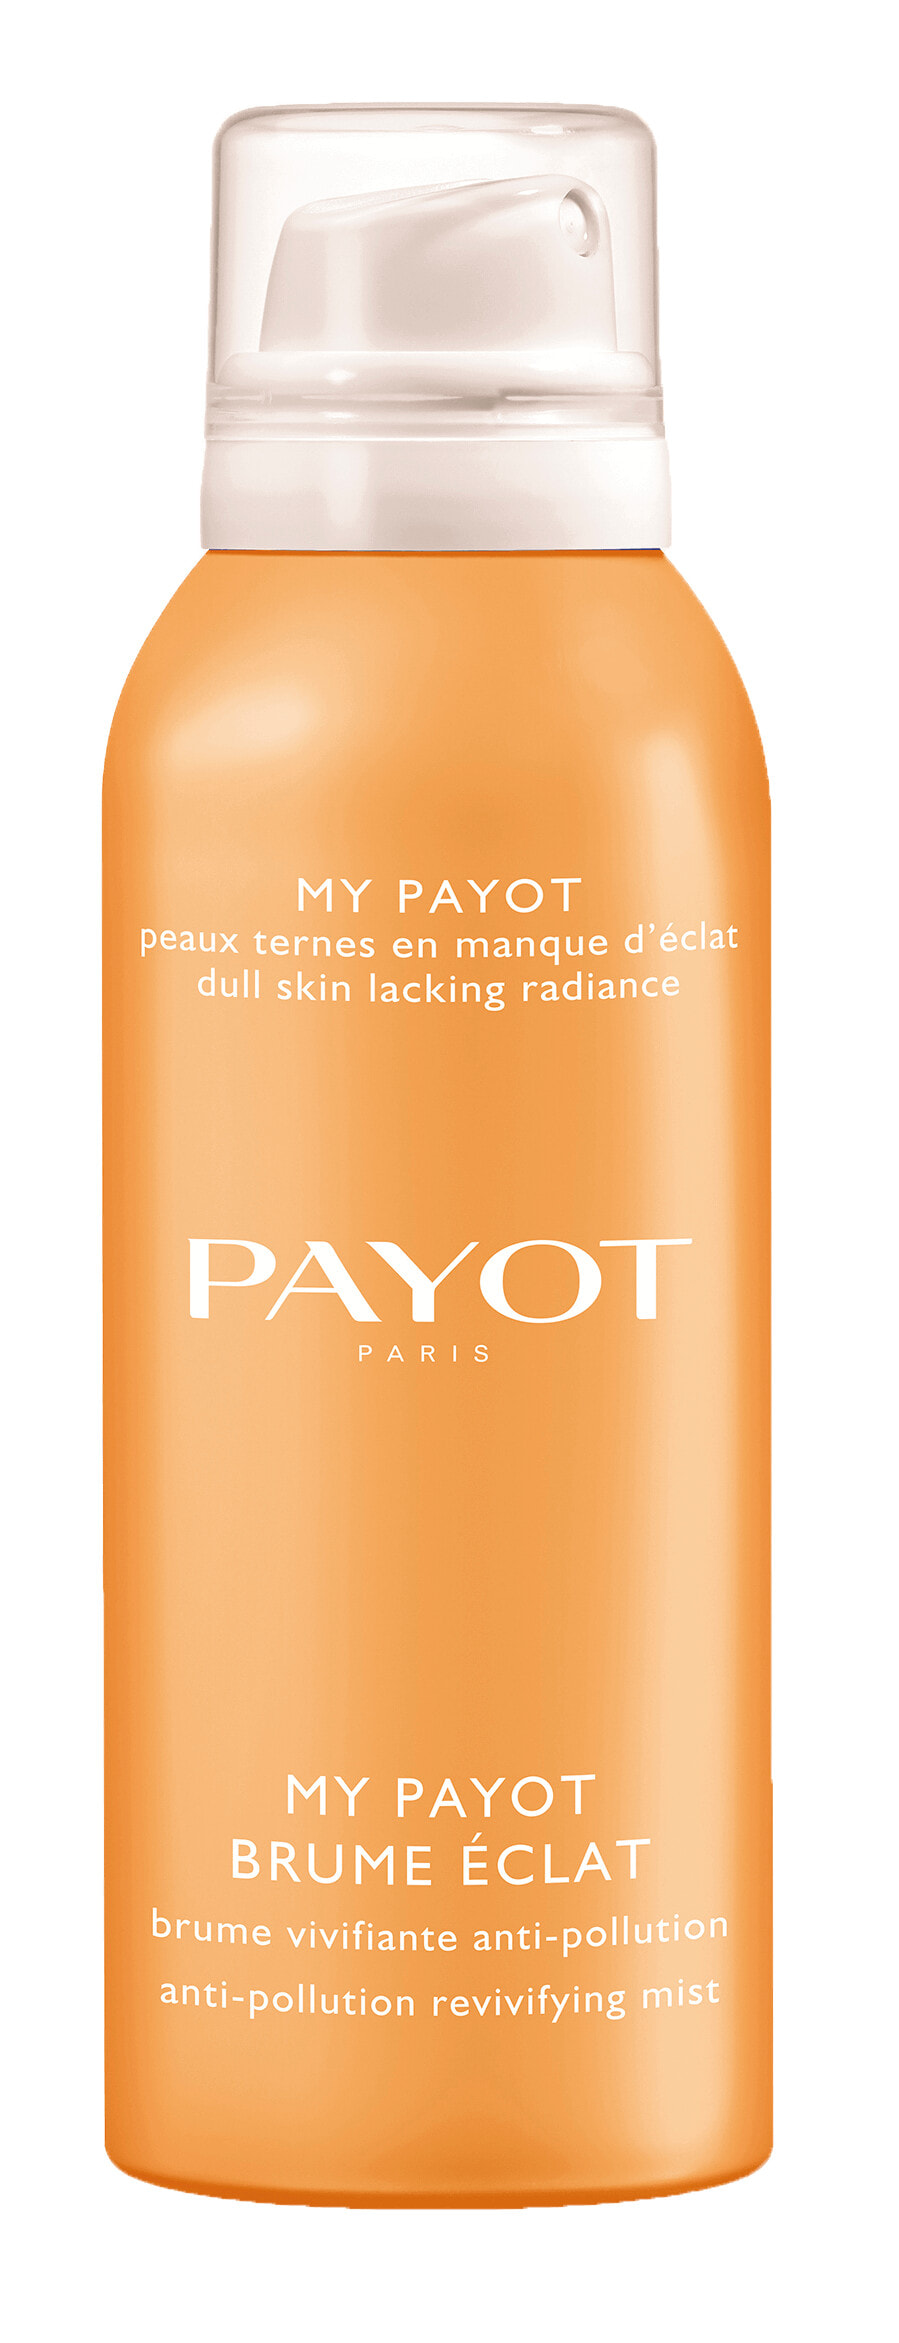 Payot My Payot Brume Eclat  Легкий и освежающий мист для защиты кожи от загрязнения 125 мл